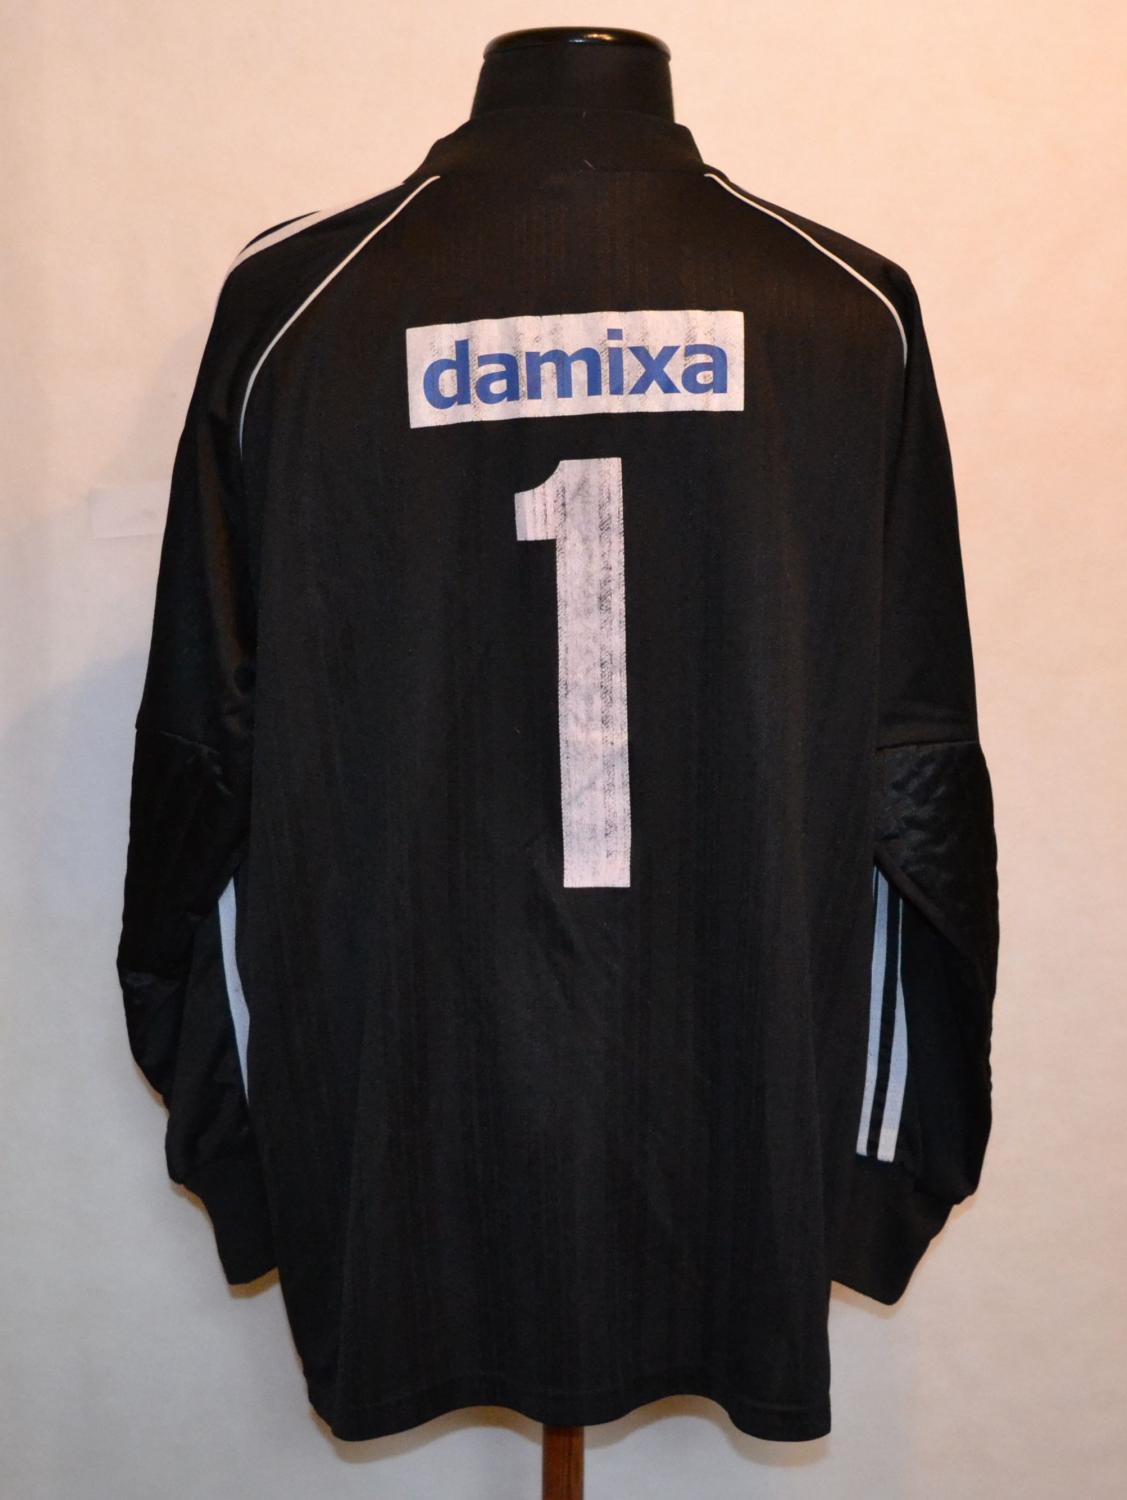 maillot odense boldklub gardien 1999-2000 pas cher